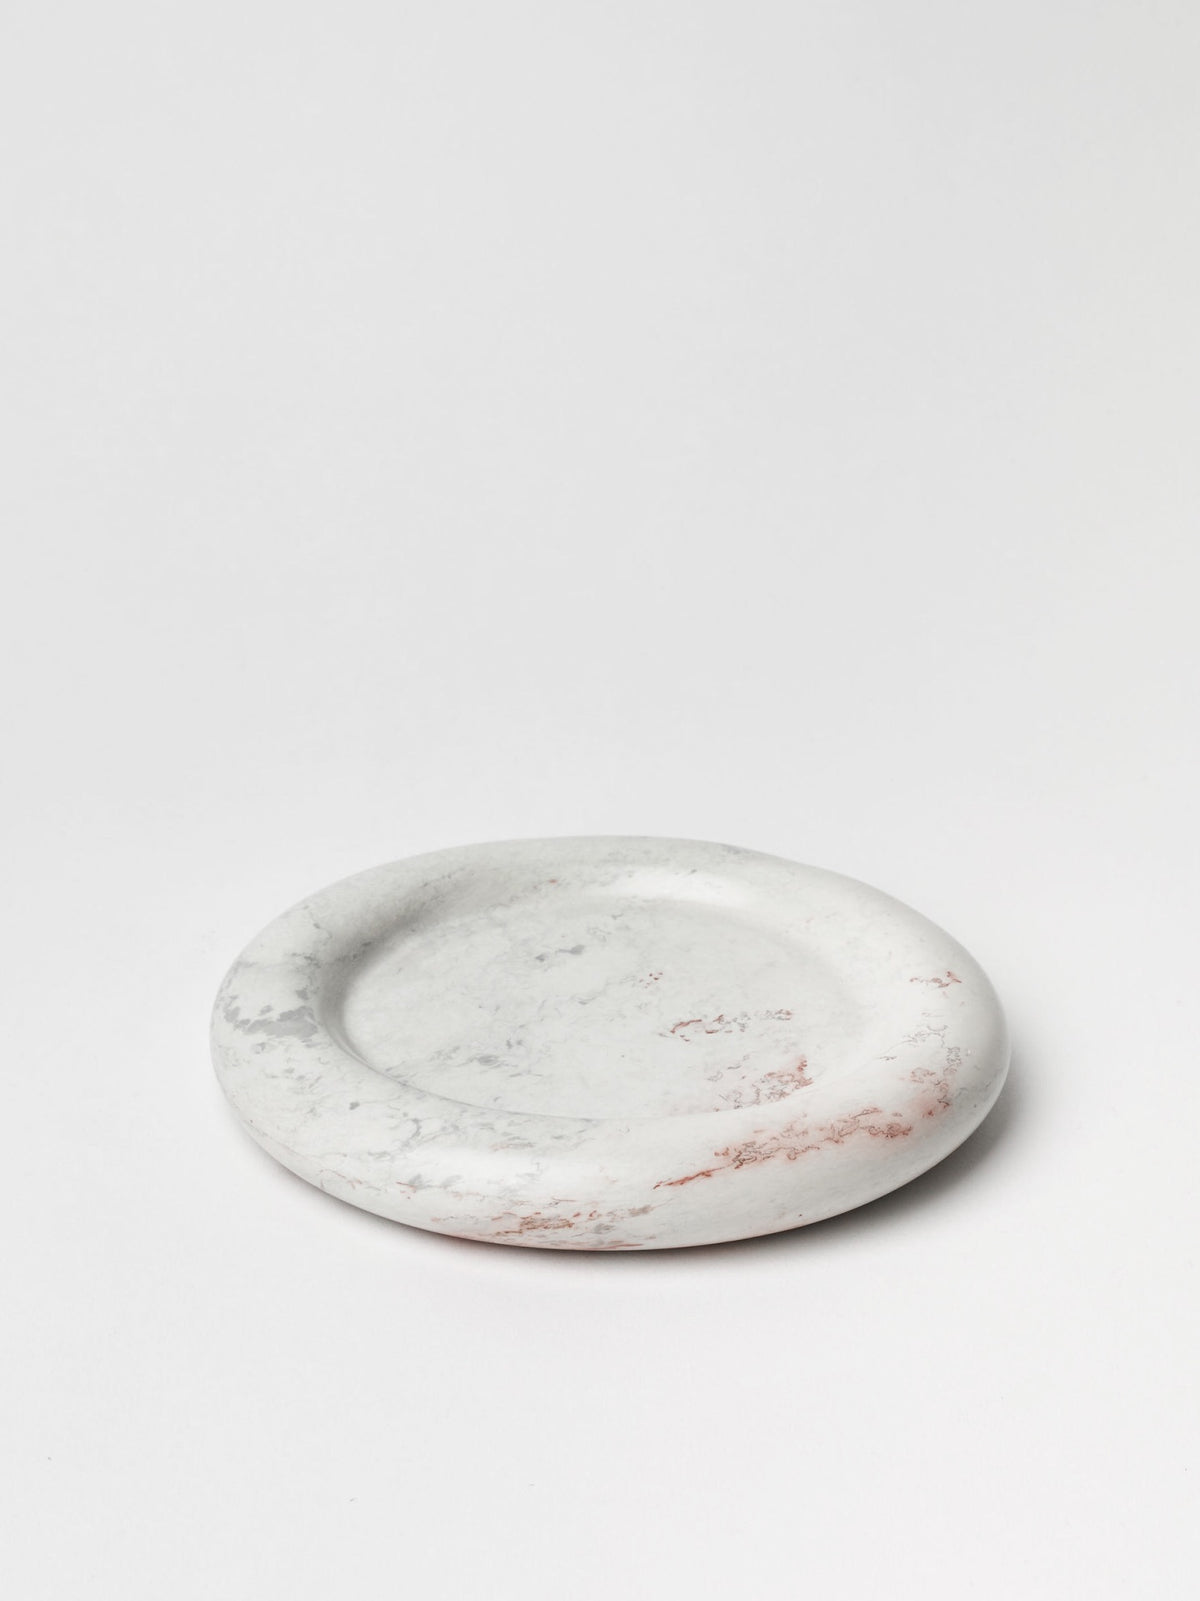 An Asili Stacker Round Tray - Malachite on a white surface.